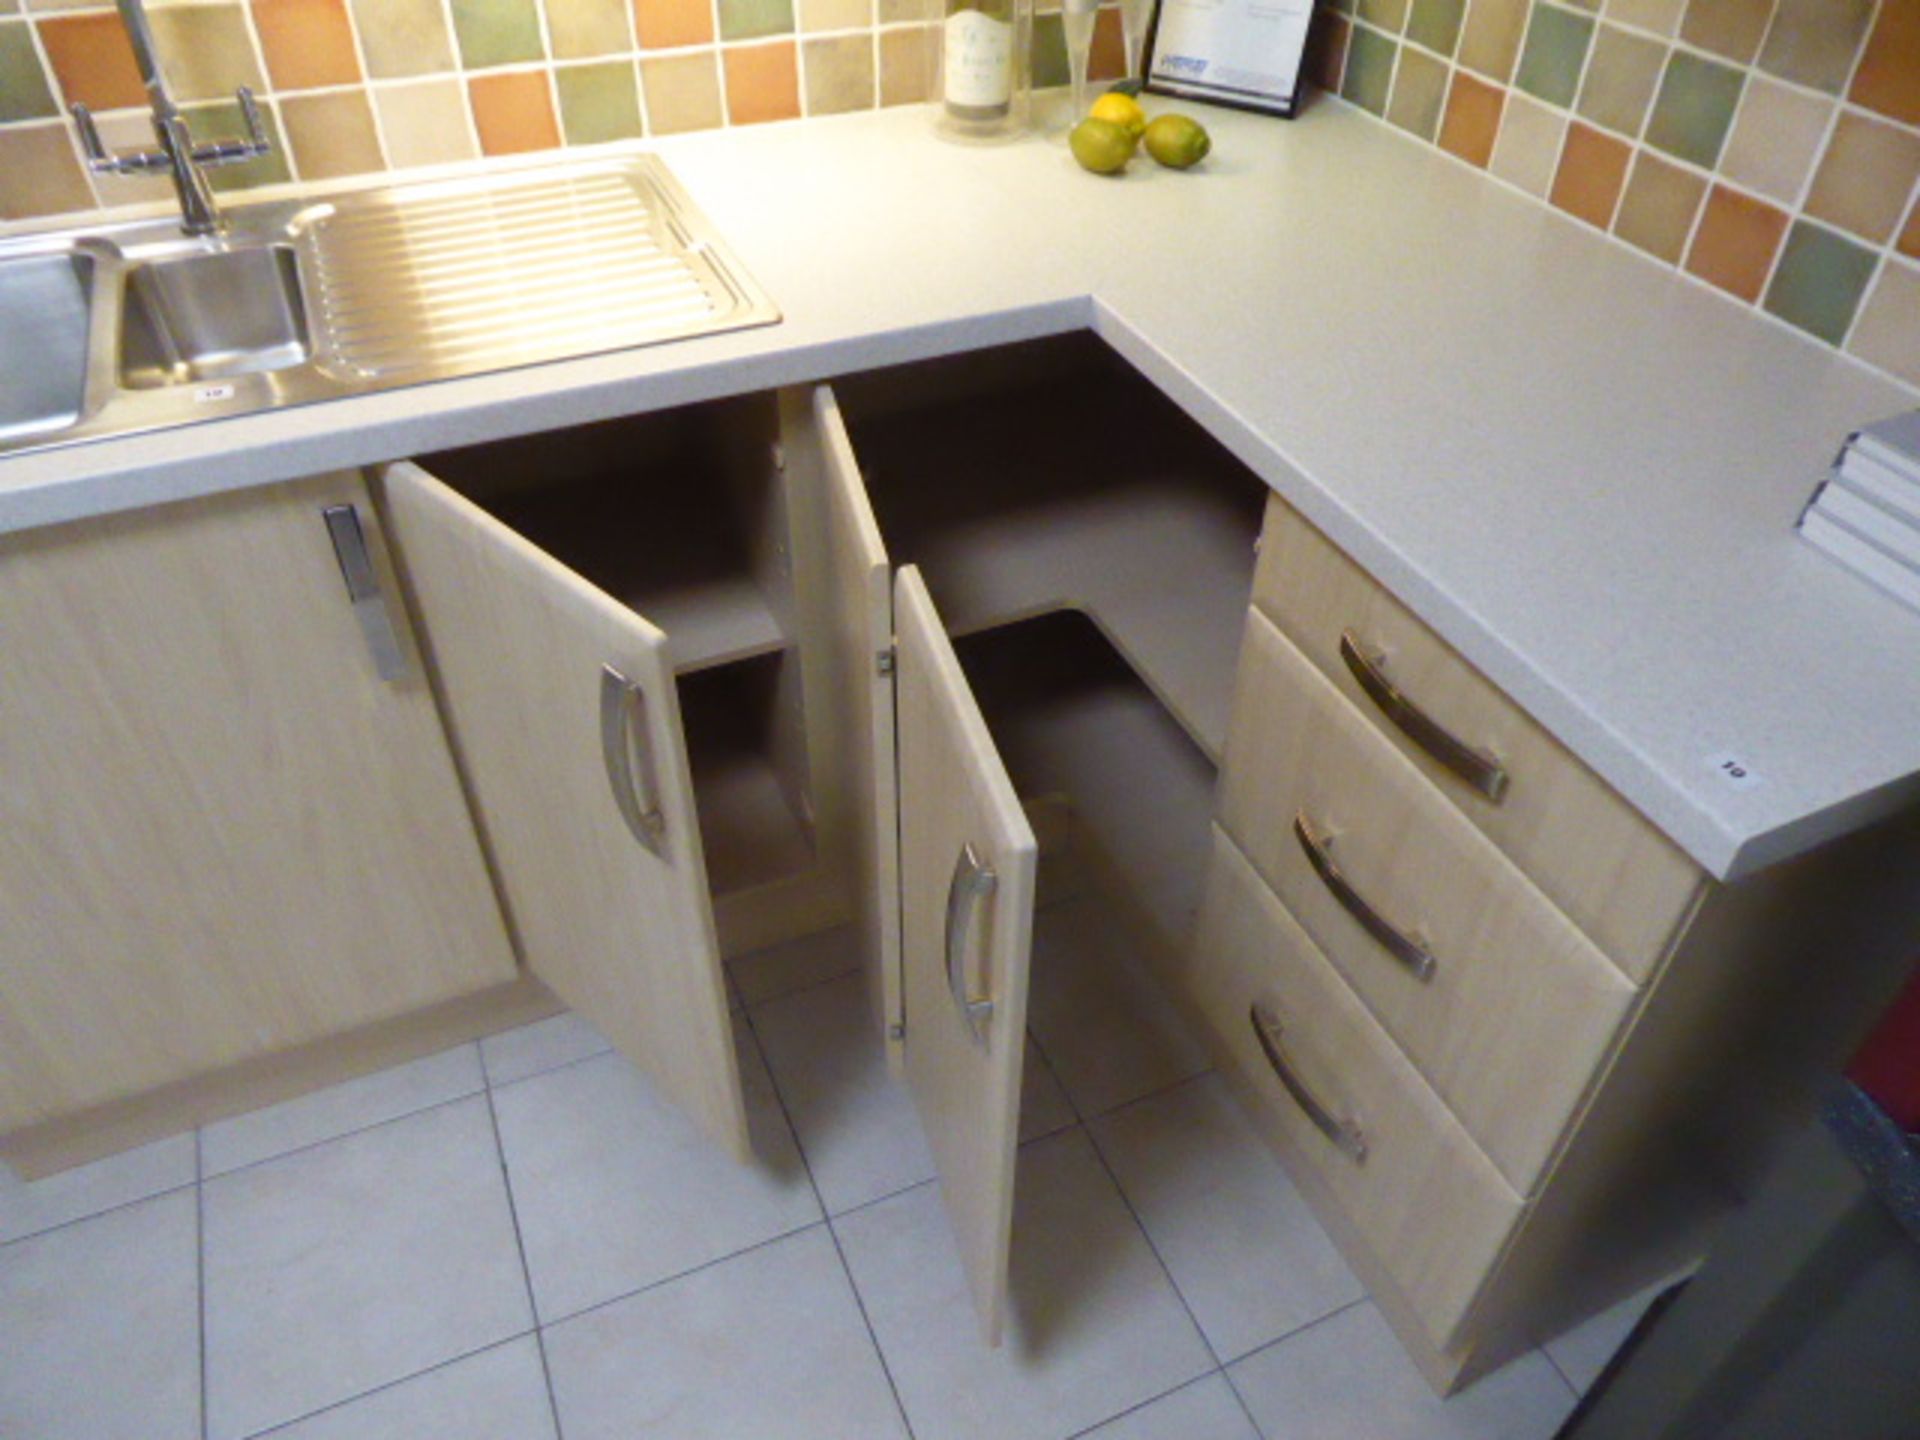 Saponetta Rose Pear kitchen in L-shape with a light grey granite effect worktop. Max dimension 190cm - Bild 4 aus 5